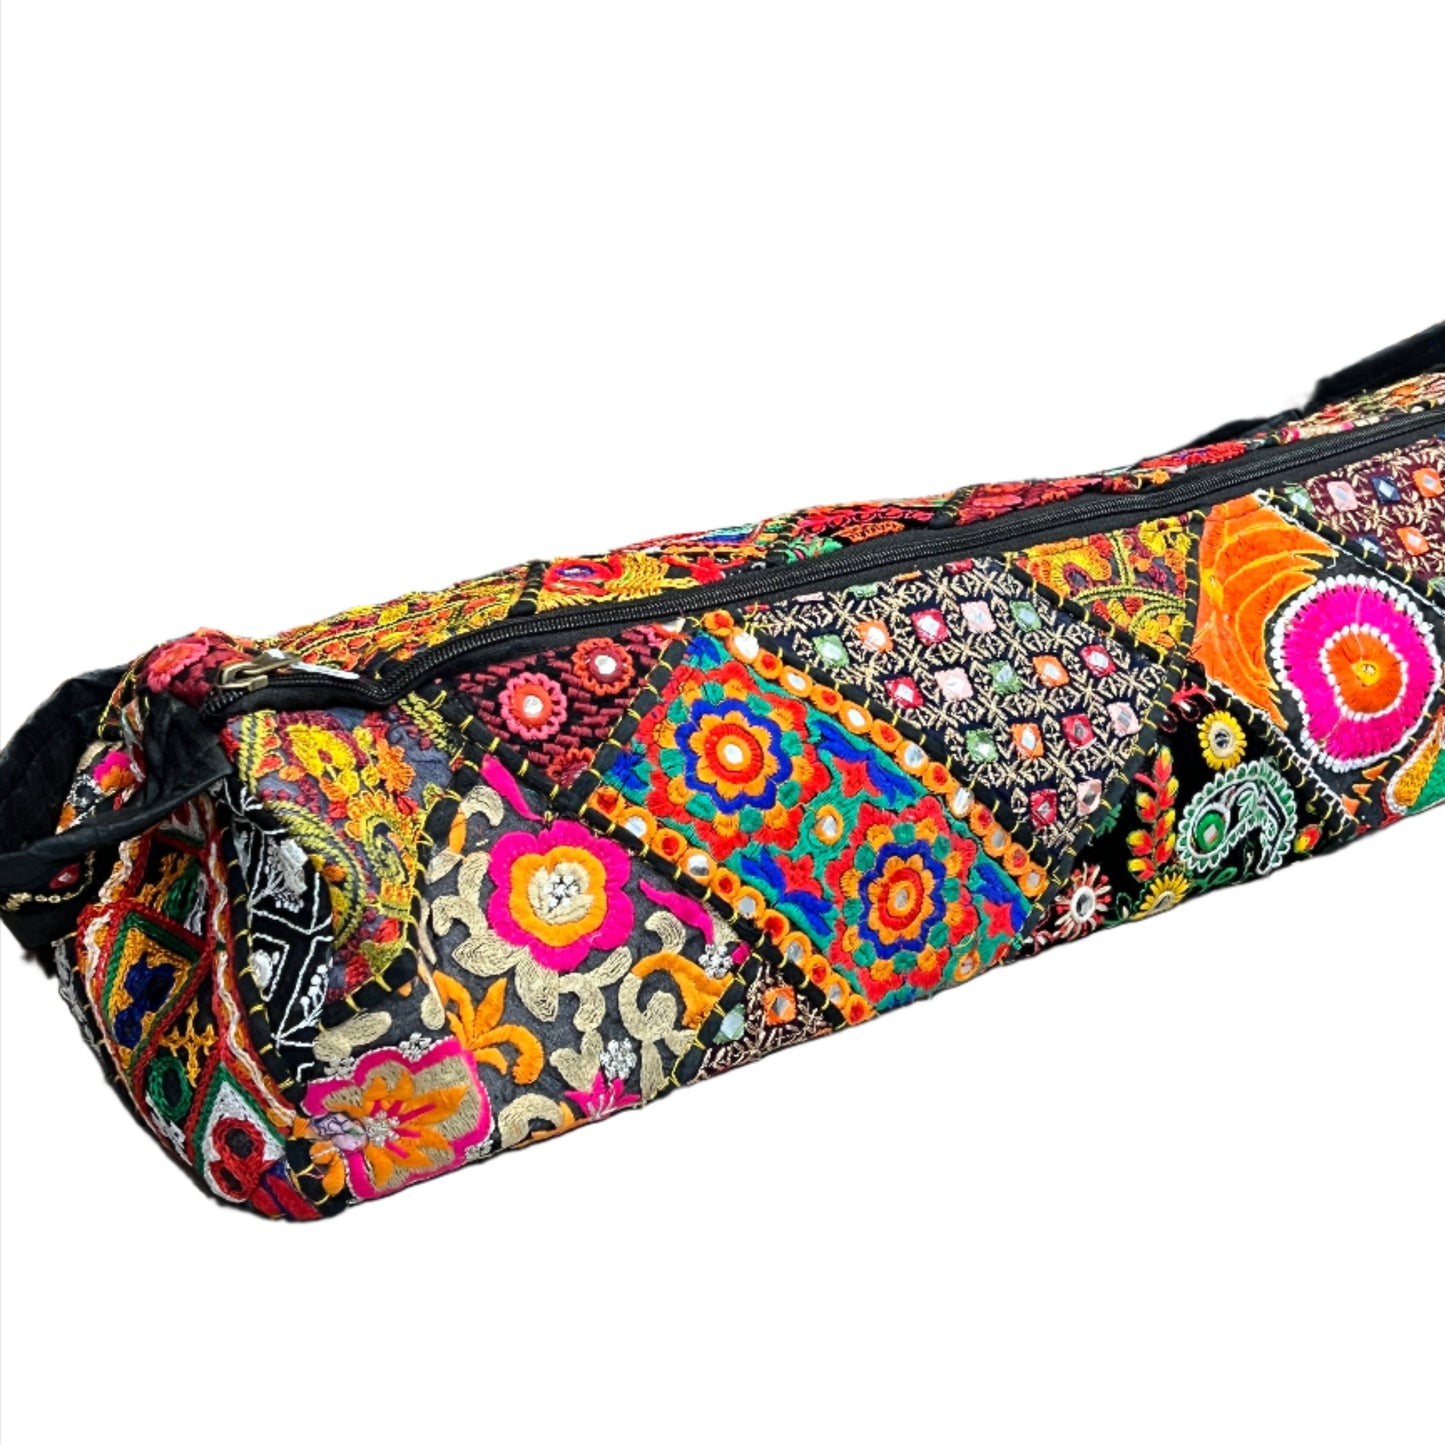 Rajasthani Embroidery Patchwork Yoga Bag